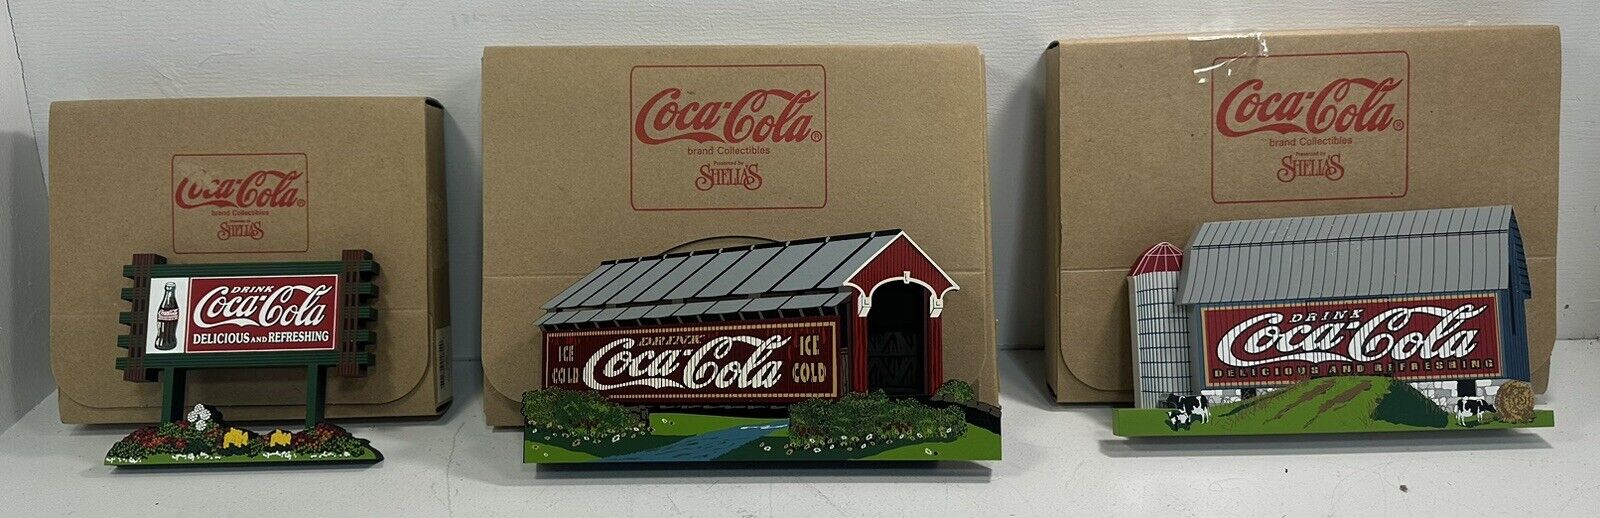 Sheila’s Coca-Cola Brand Collectibles Vintage Wooden Cok04 Cok05 Cok06 Coke